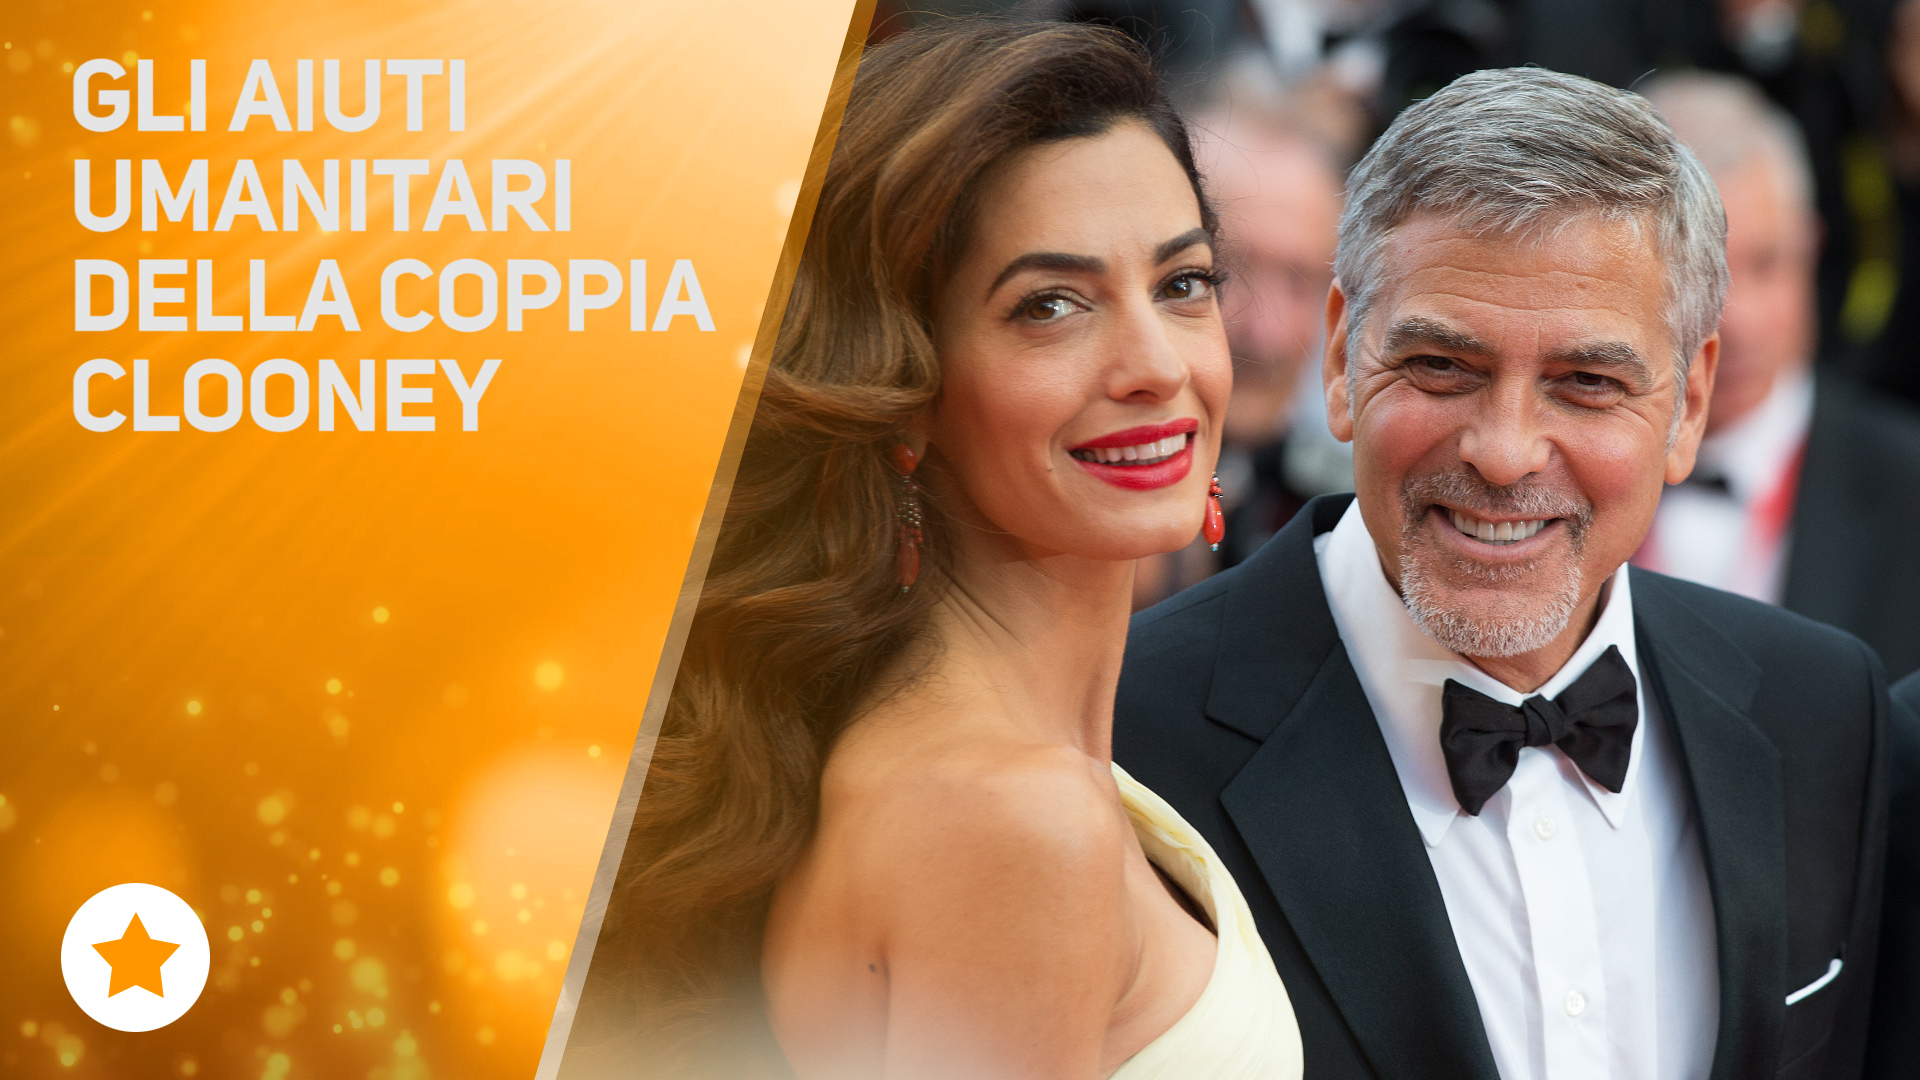 George Clooney assente a cerimonia: il motivo e'...